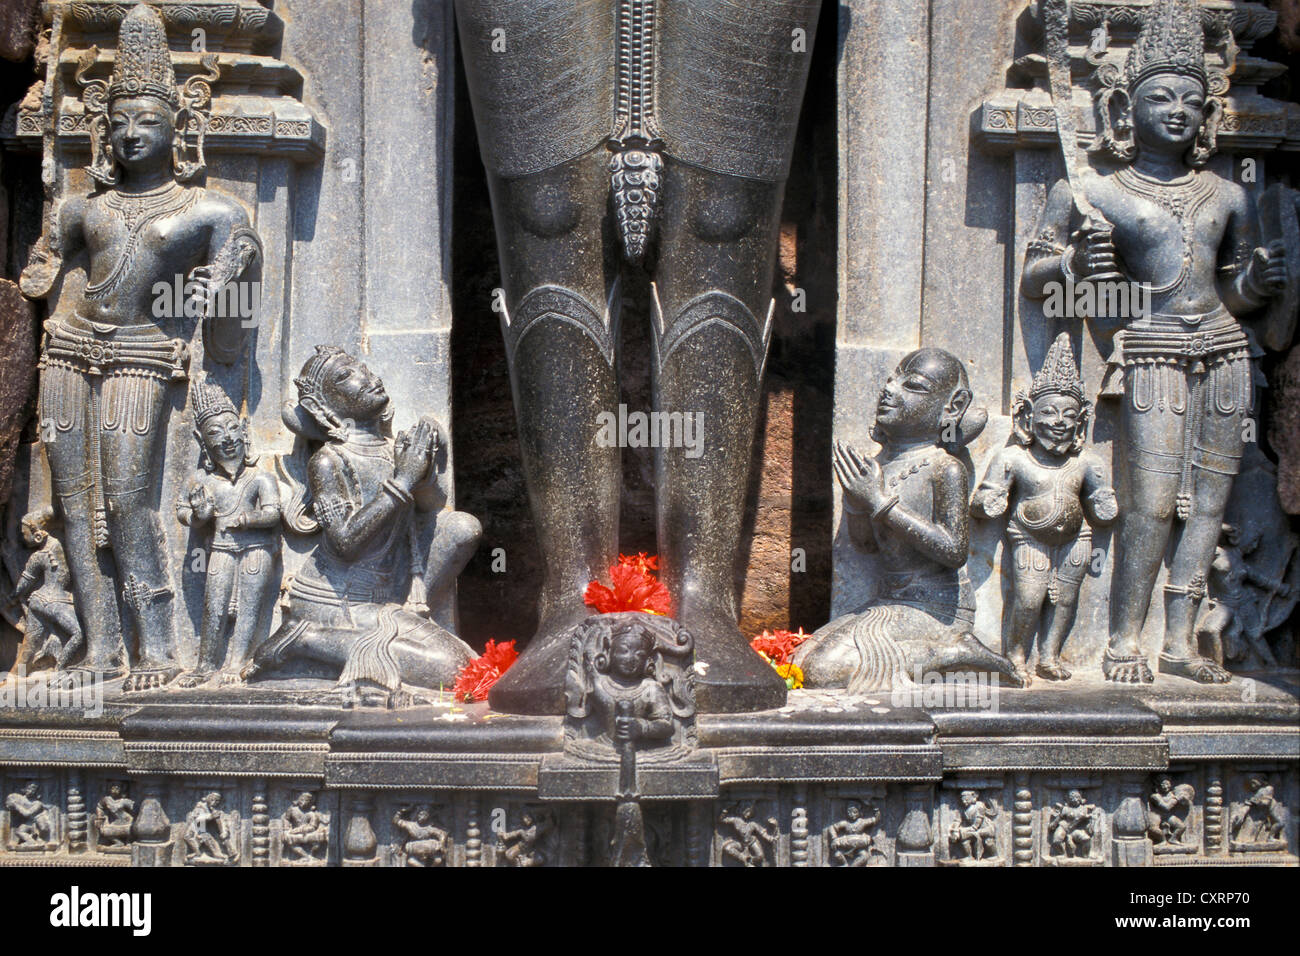 Hindu deities and statues praying, statue of the Vedic sun god Surya, Surya Temple or Sun Temple, UNESCO World Heritage Site Stock Photo